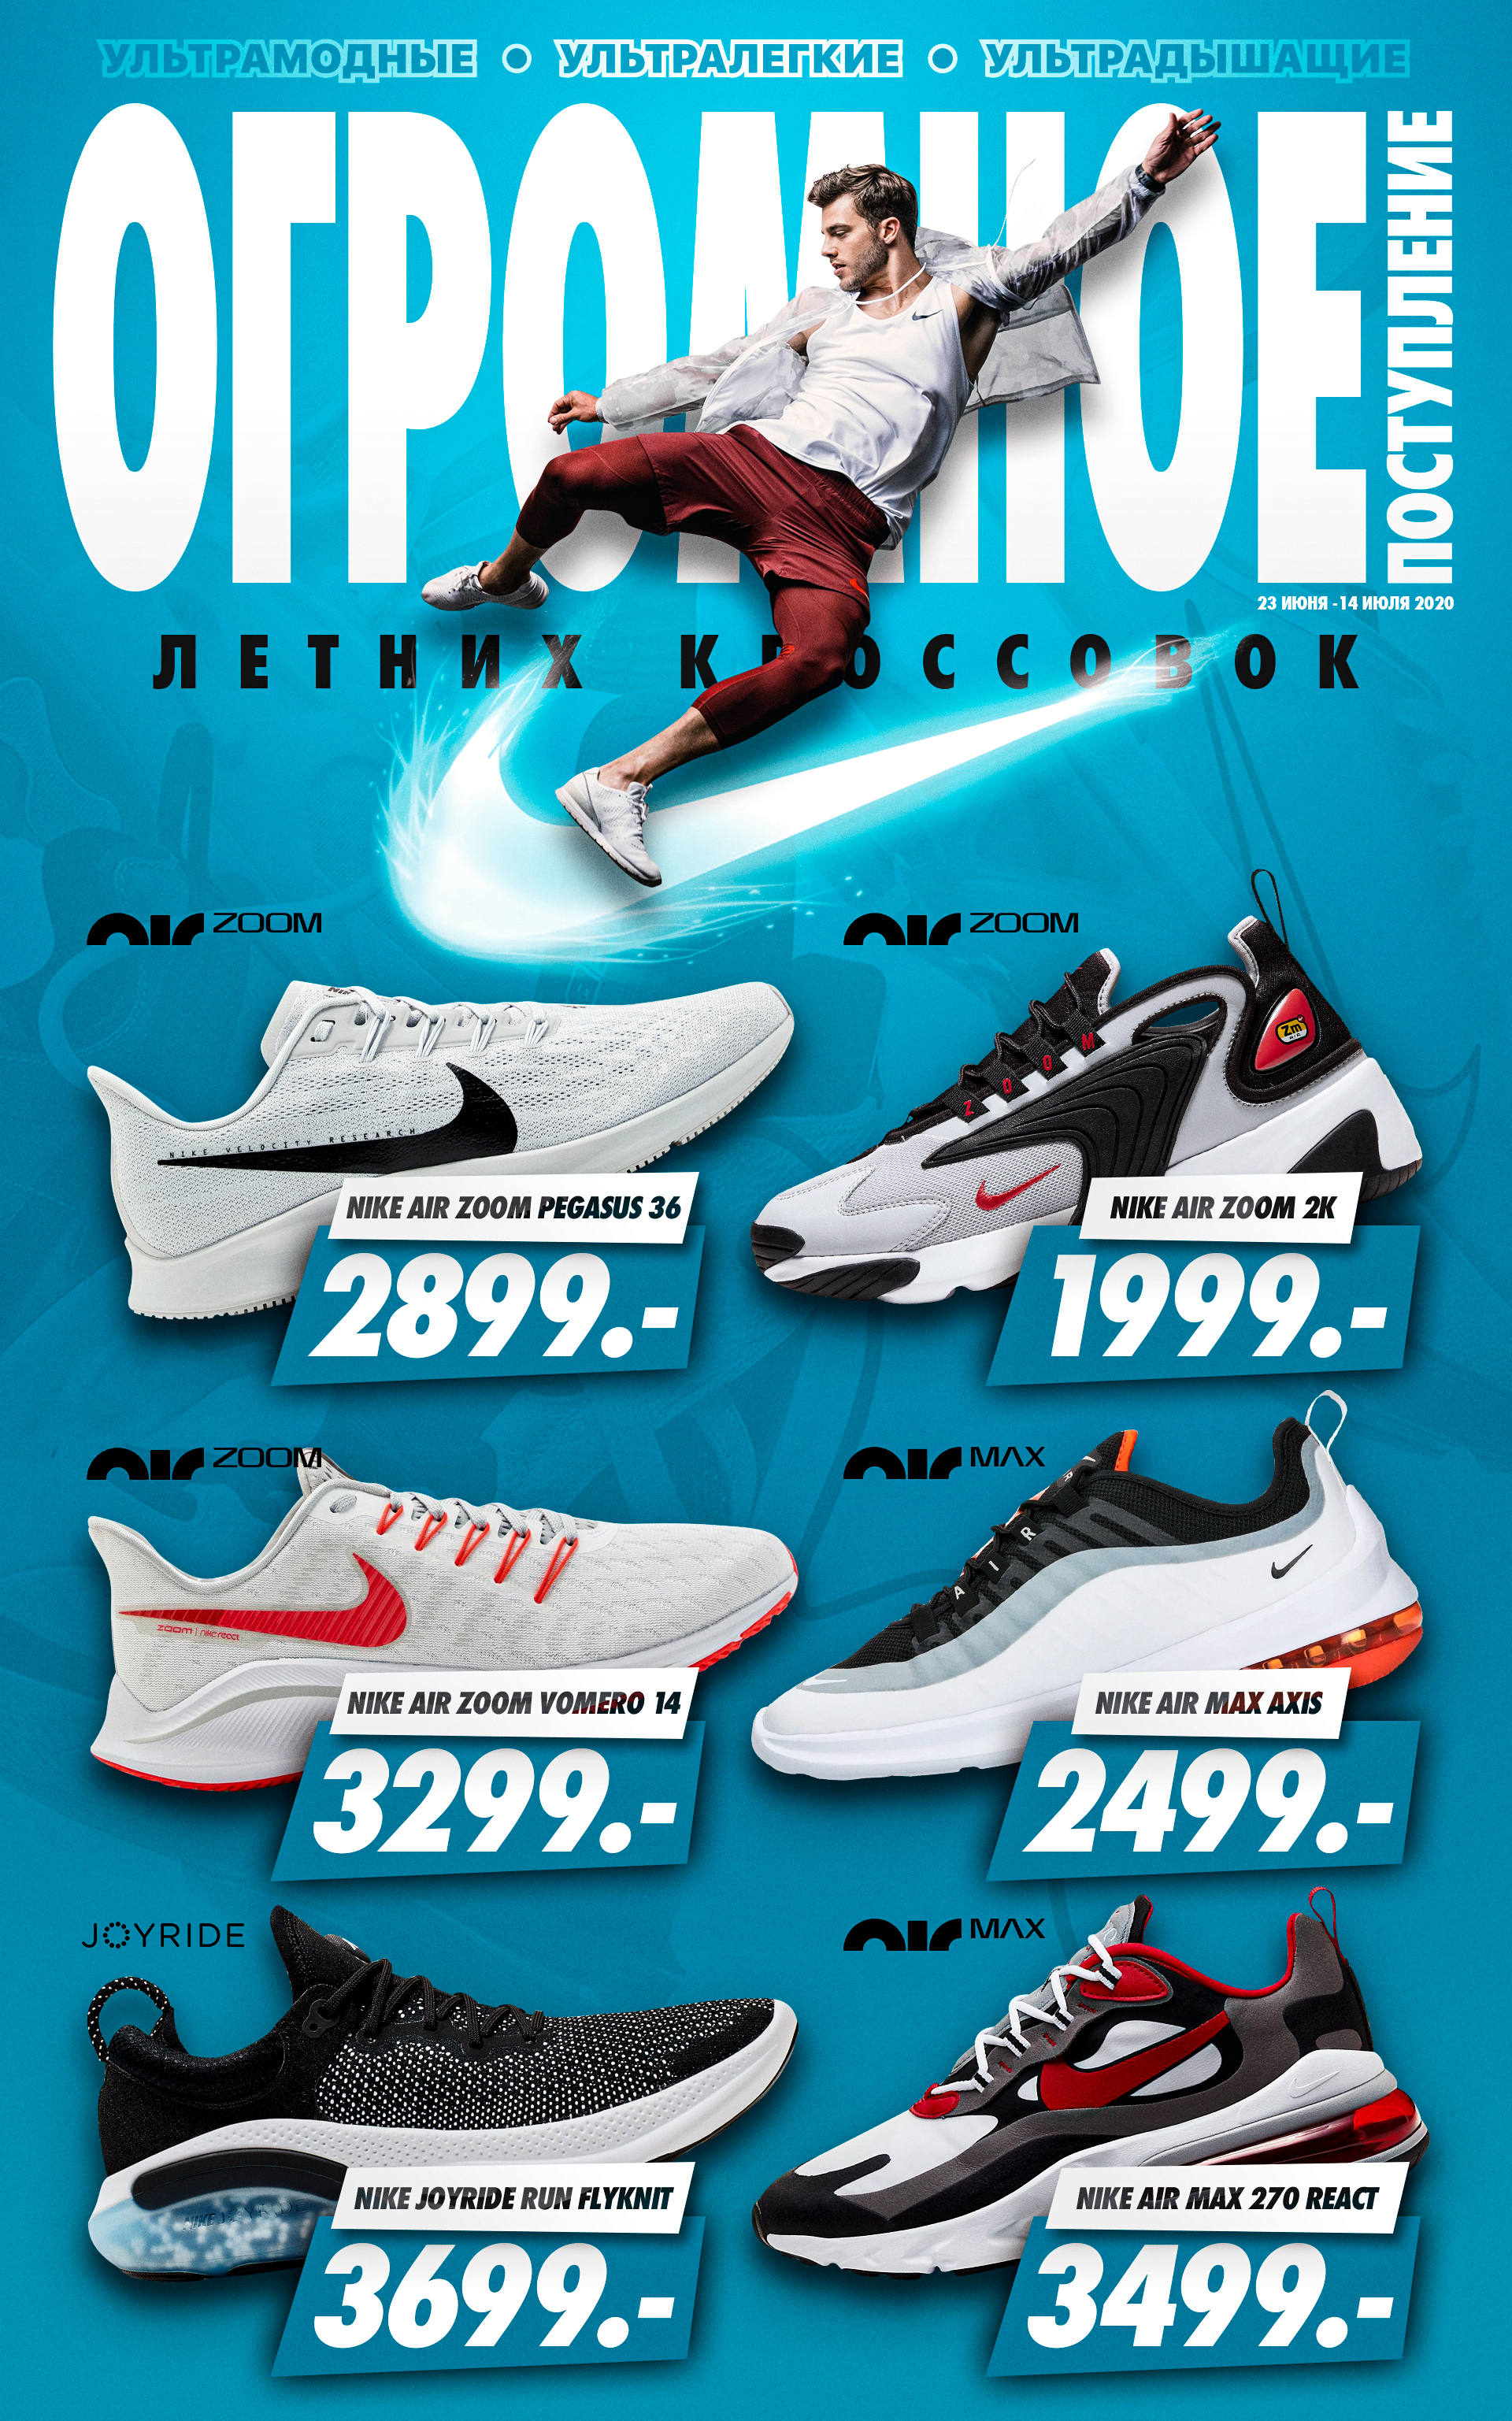 Кроссовки со скидкой. Nike каталог. Кишинев Nike. Магазин Nike в Кишиневе. Листовки для магазина найк.